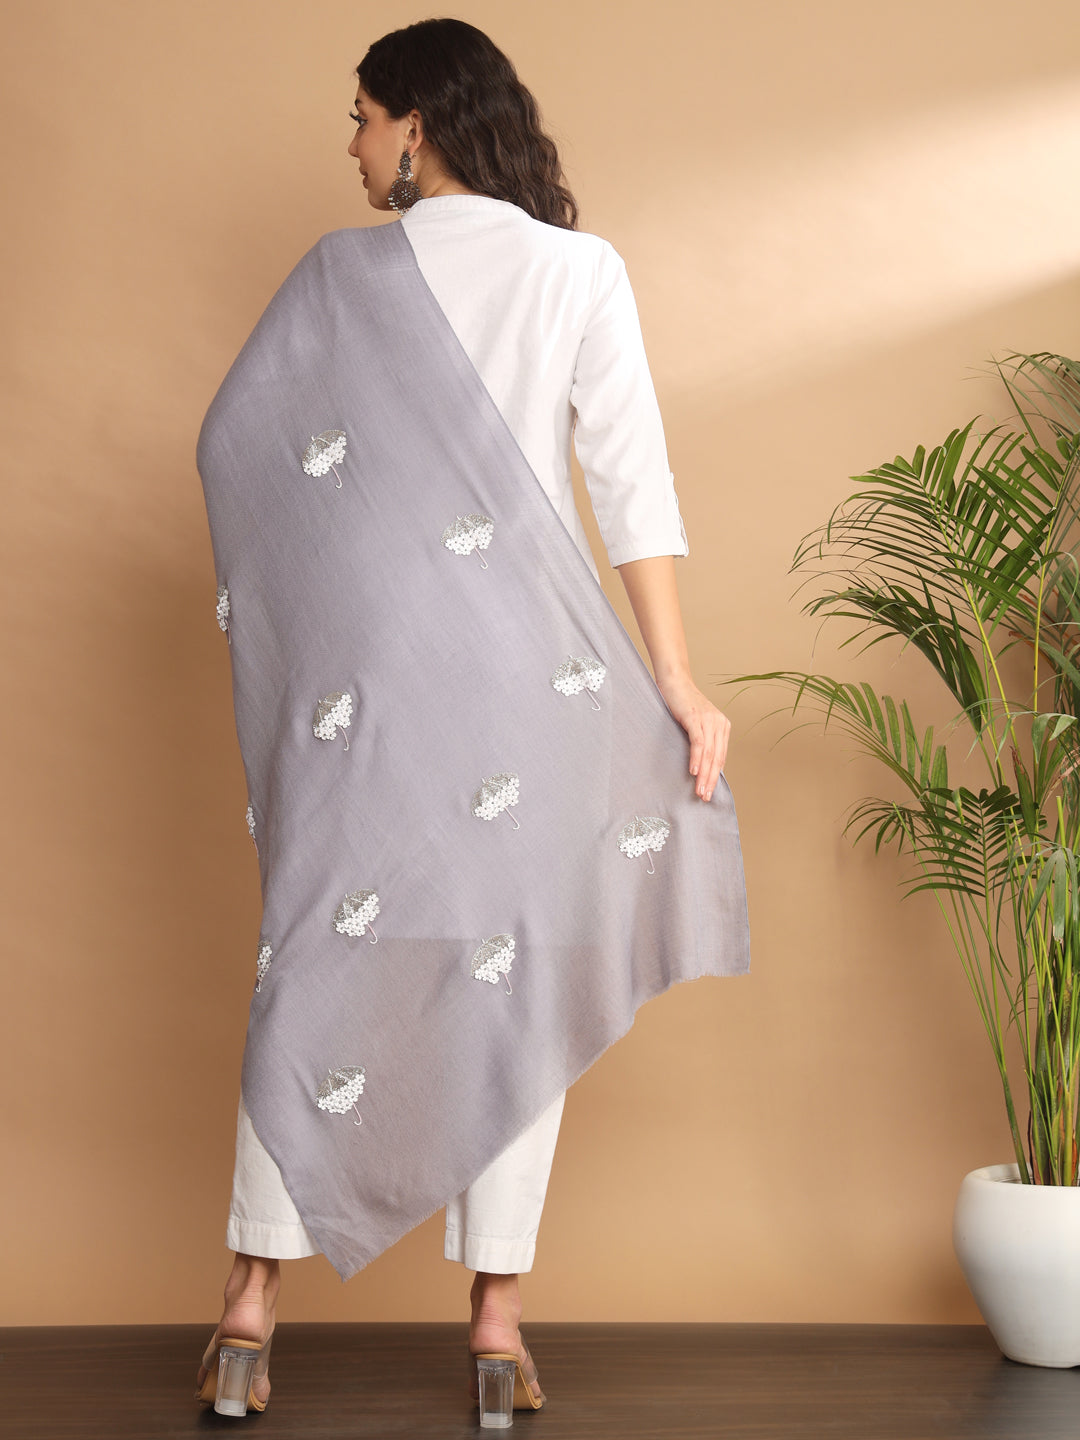 kashmir shawl online, pure wool shawls for ladies